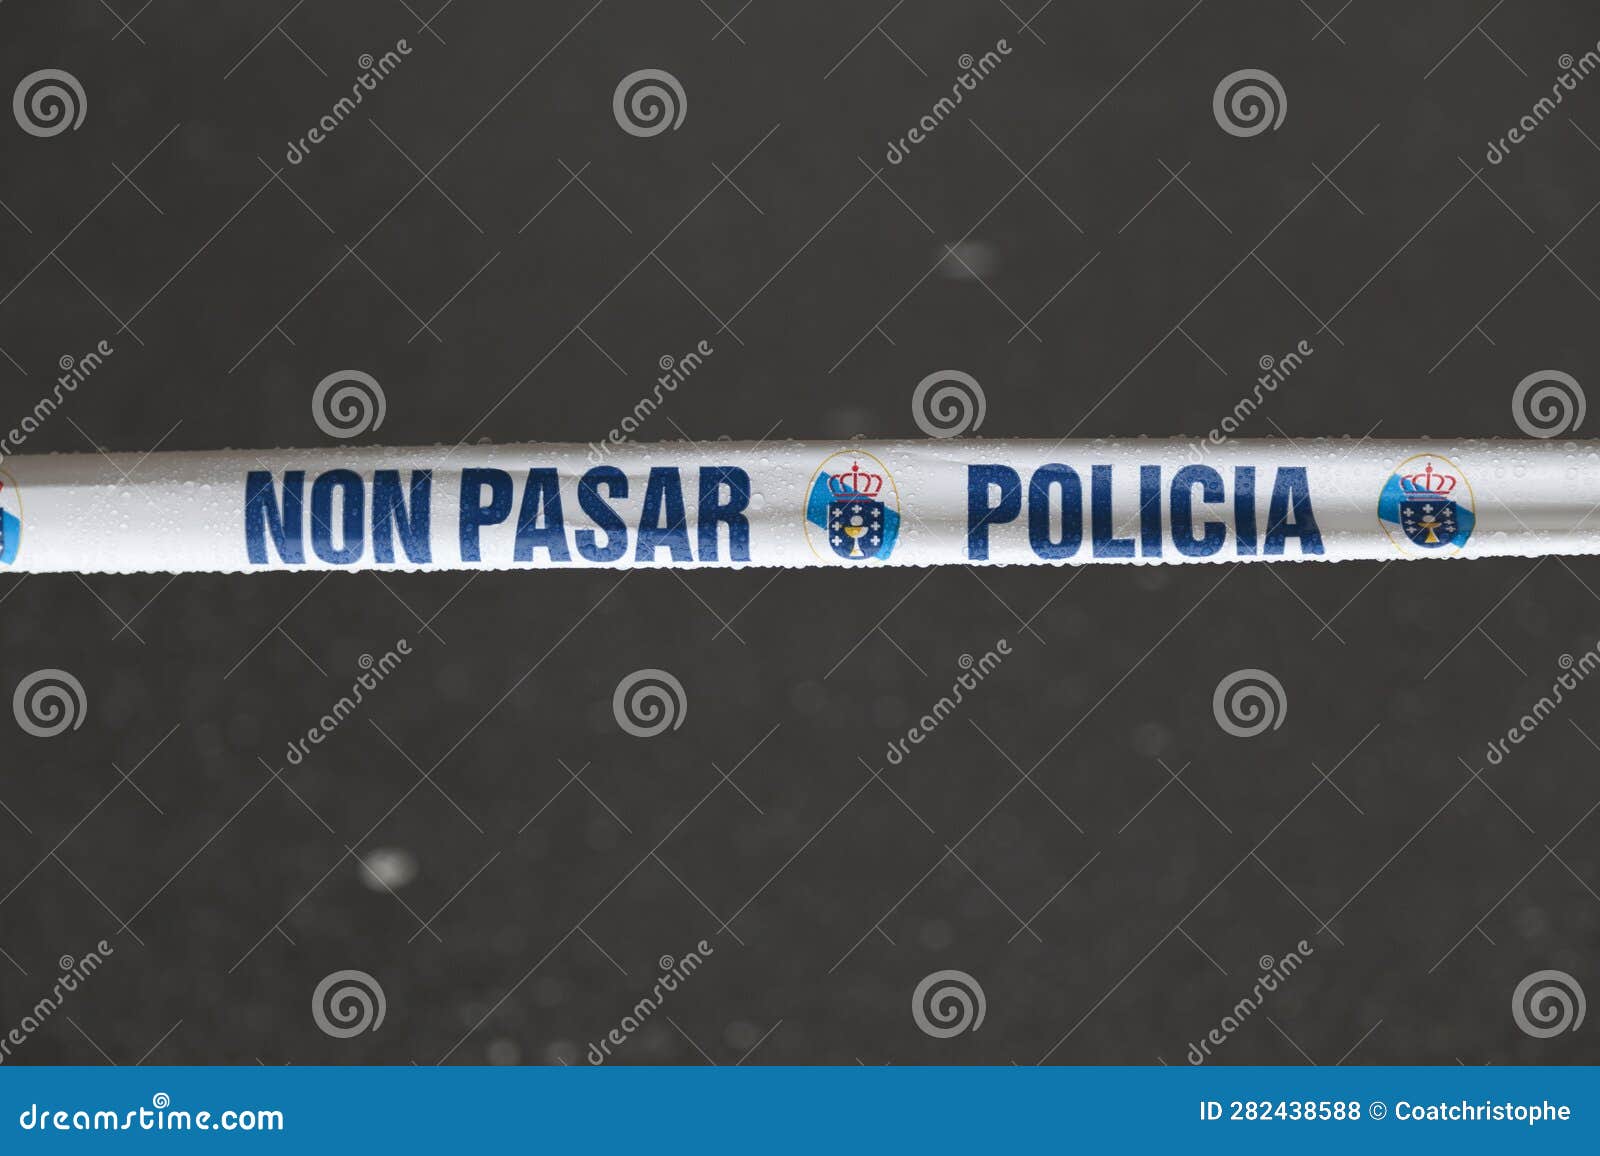 galician police tape